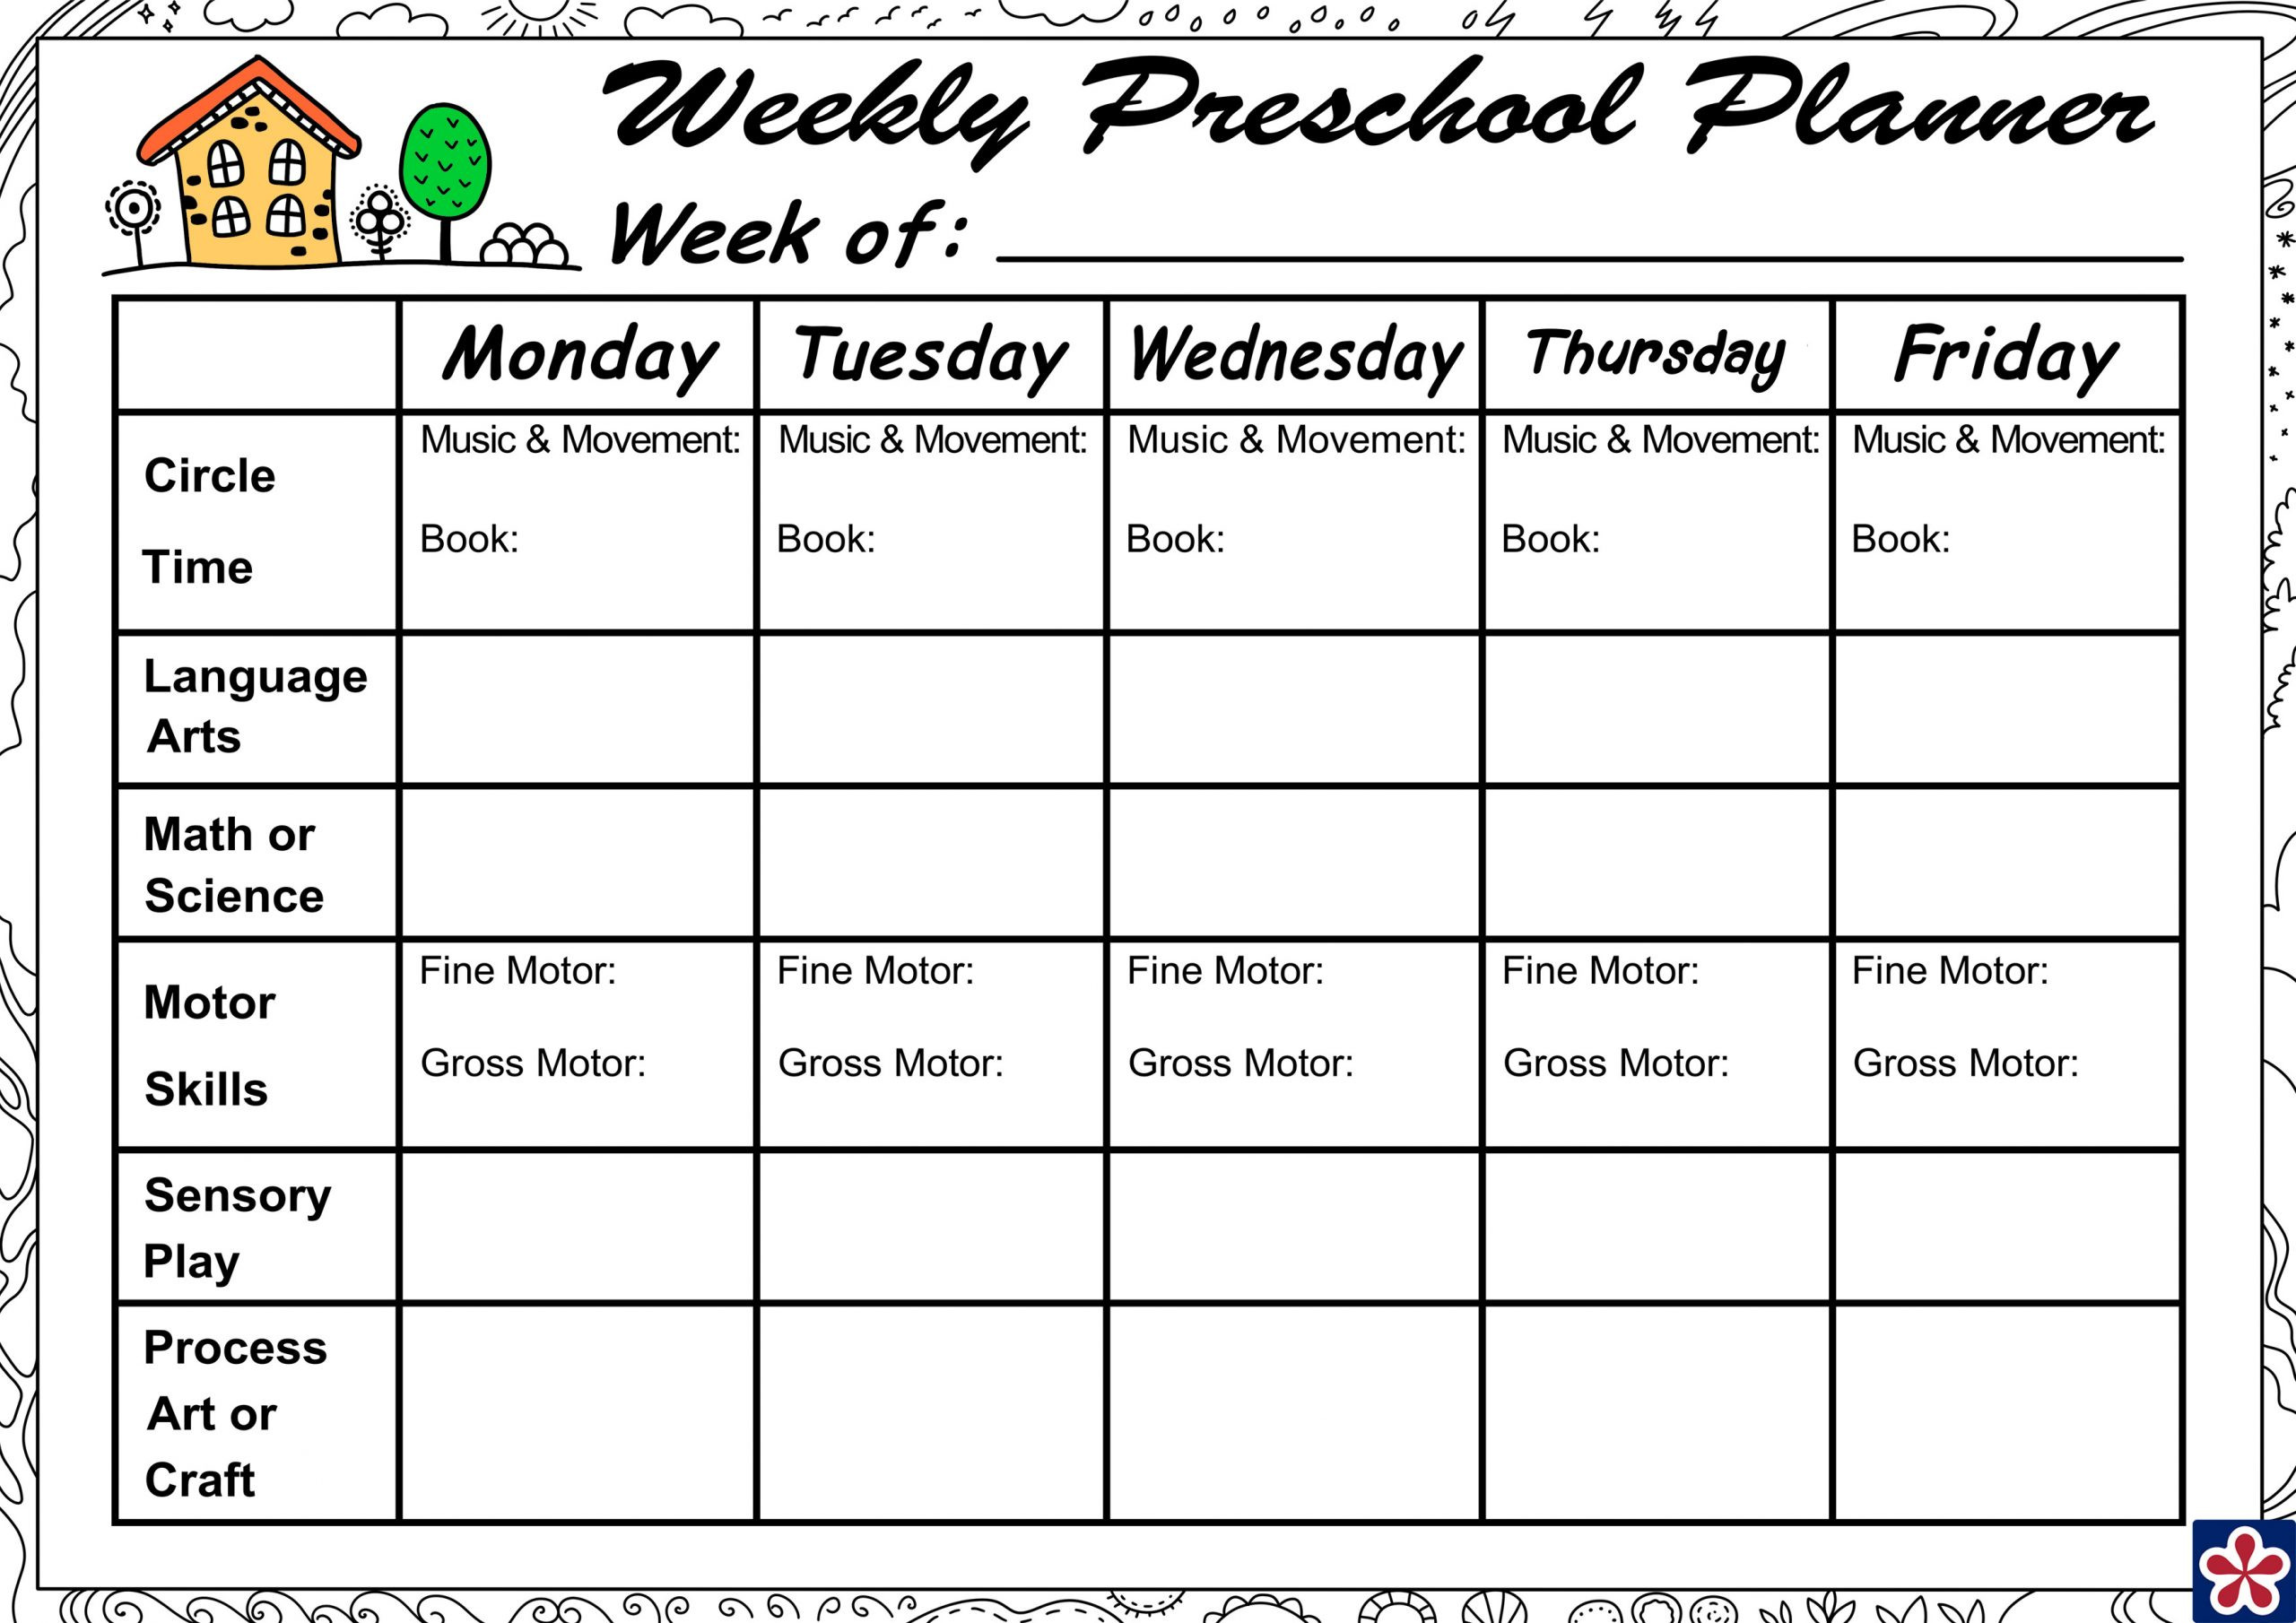 Preschool Weekly Lesson Plan Weekly Planner for Your Preschool Class